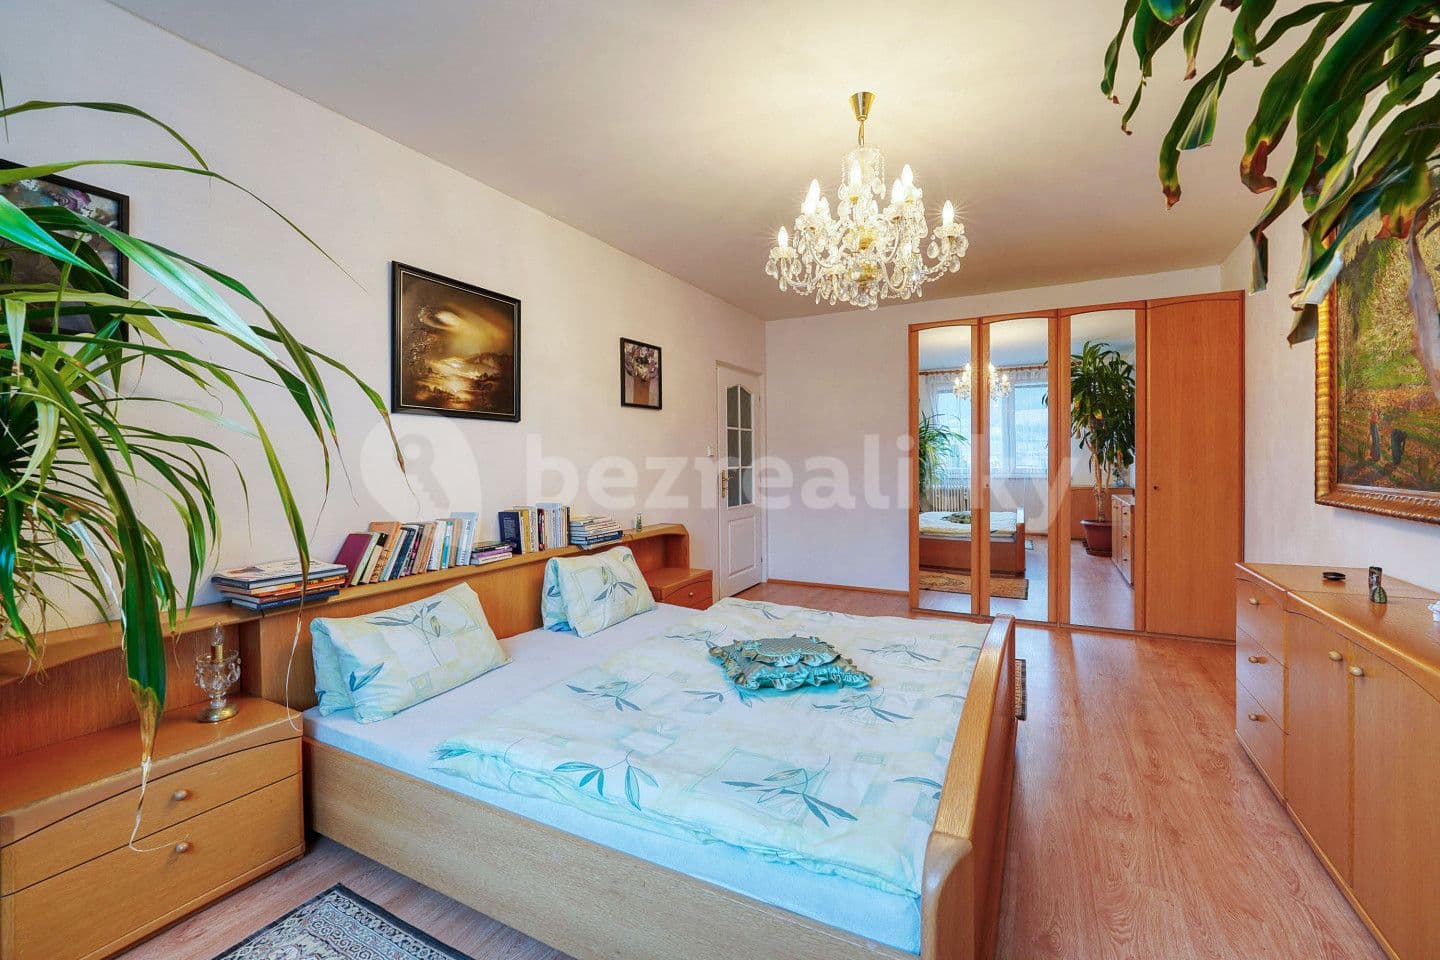 2 bedroom flat for sale, 65 m², Sirkařská, Sušice, Plzeňský Region